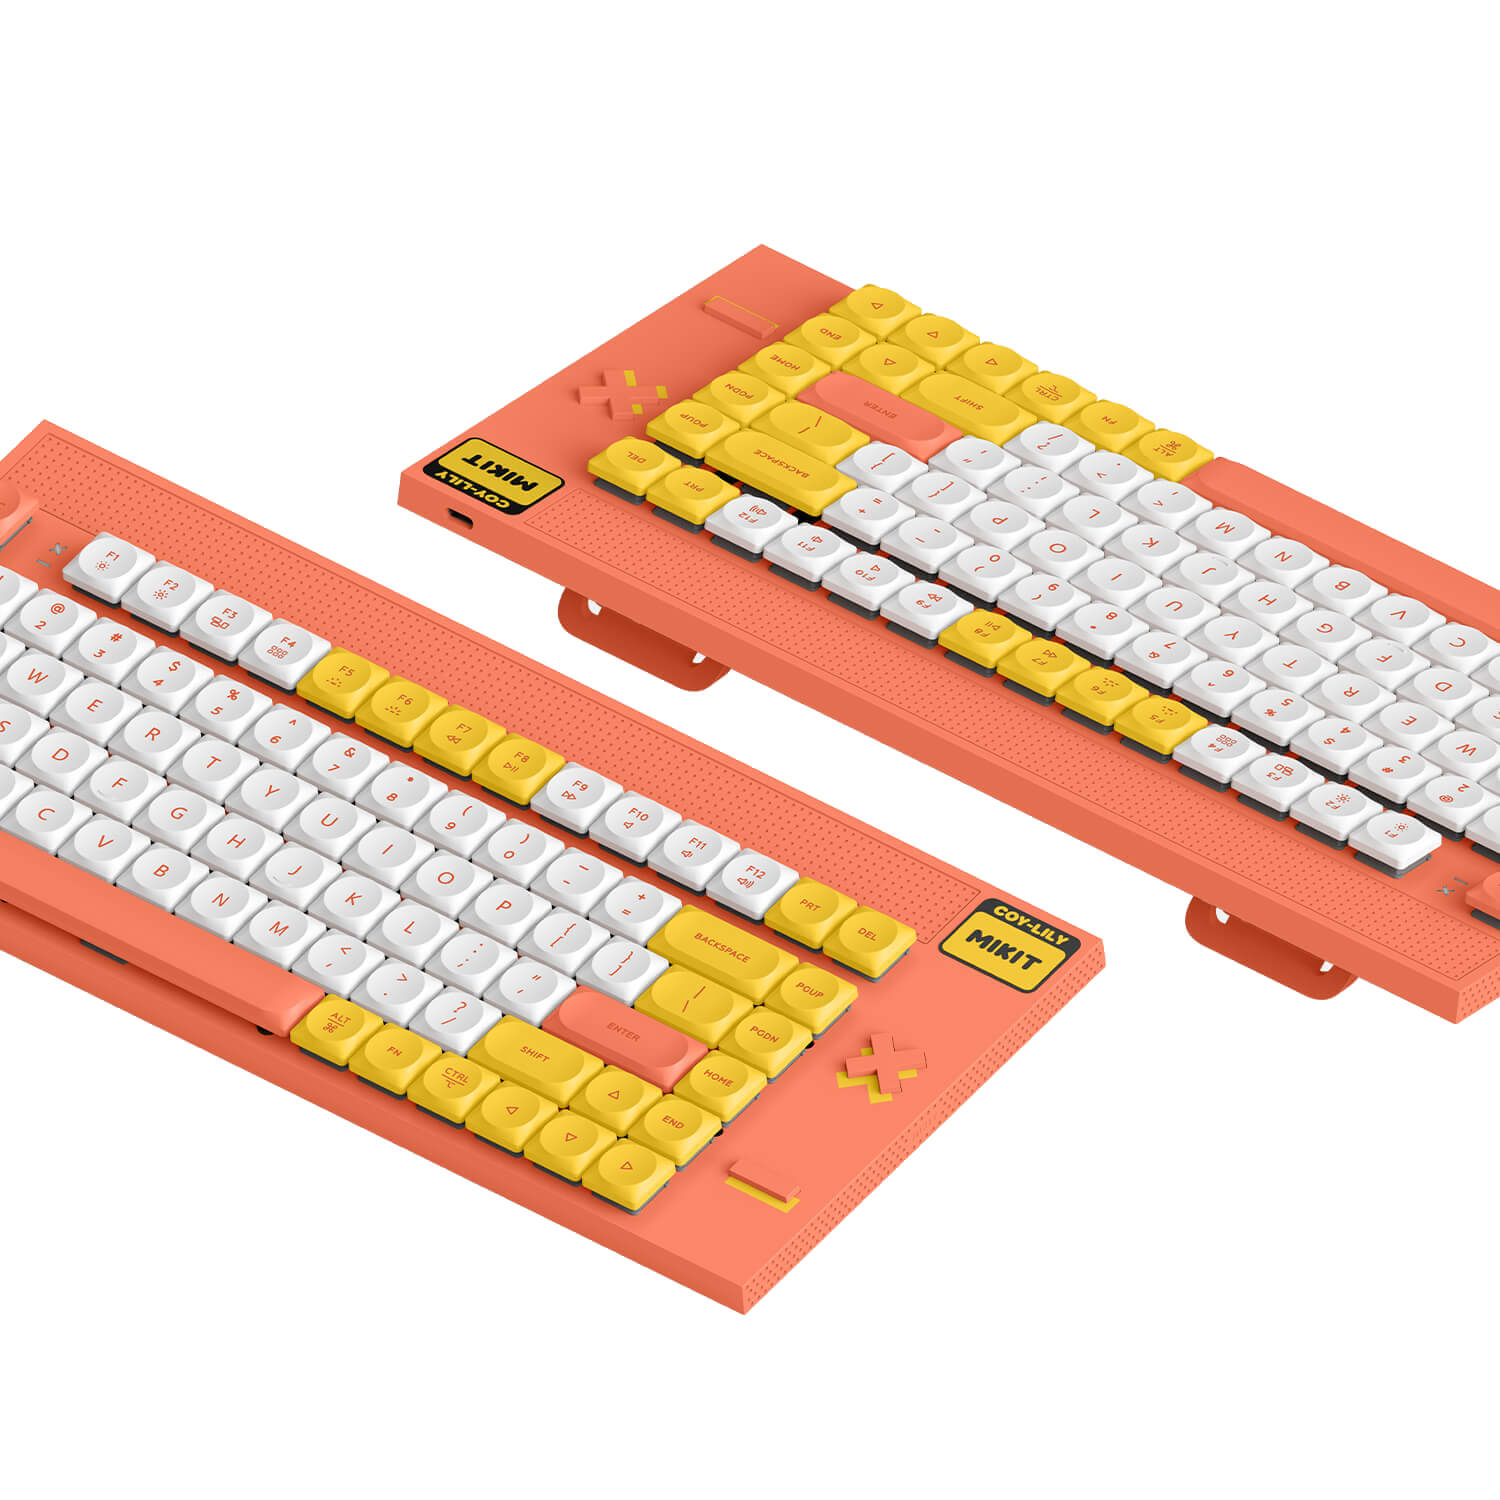 Colorful keyboard sweet keyboard for gift